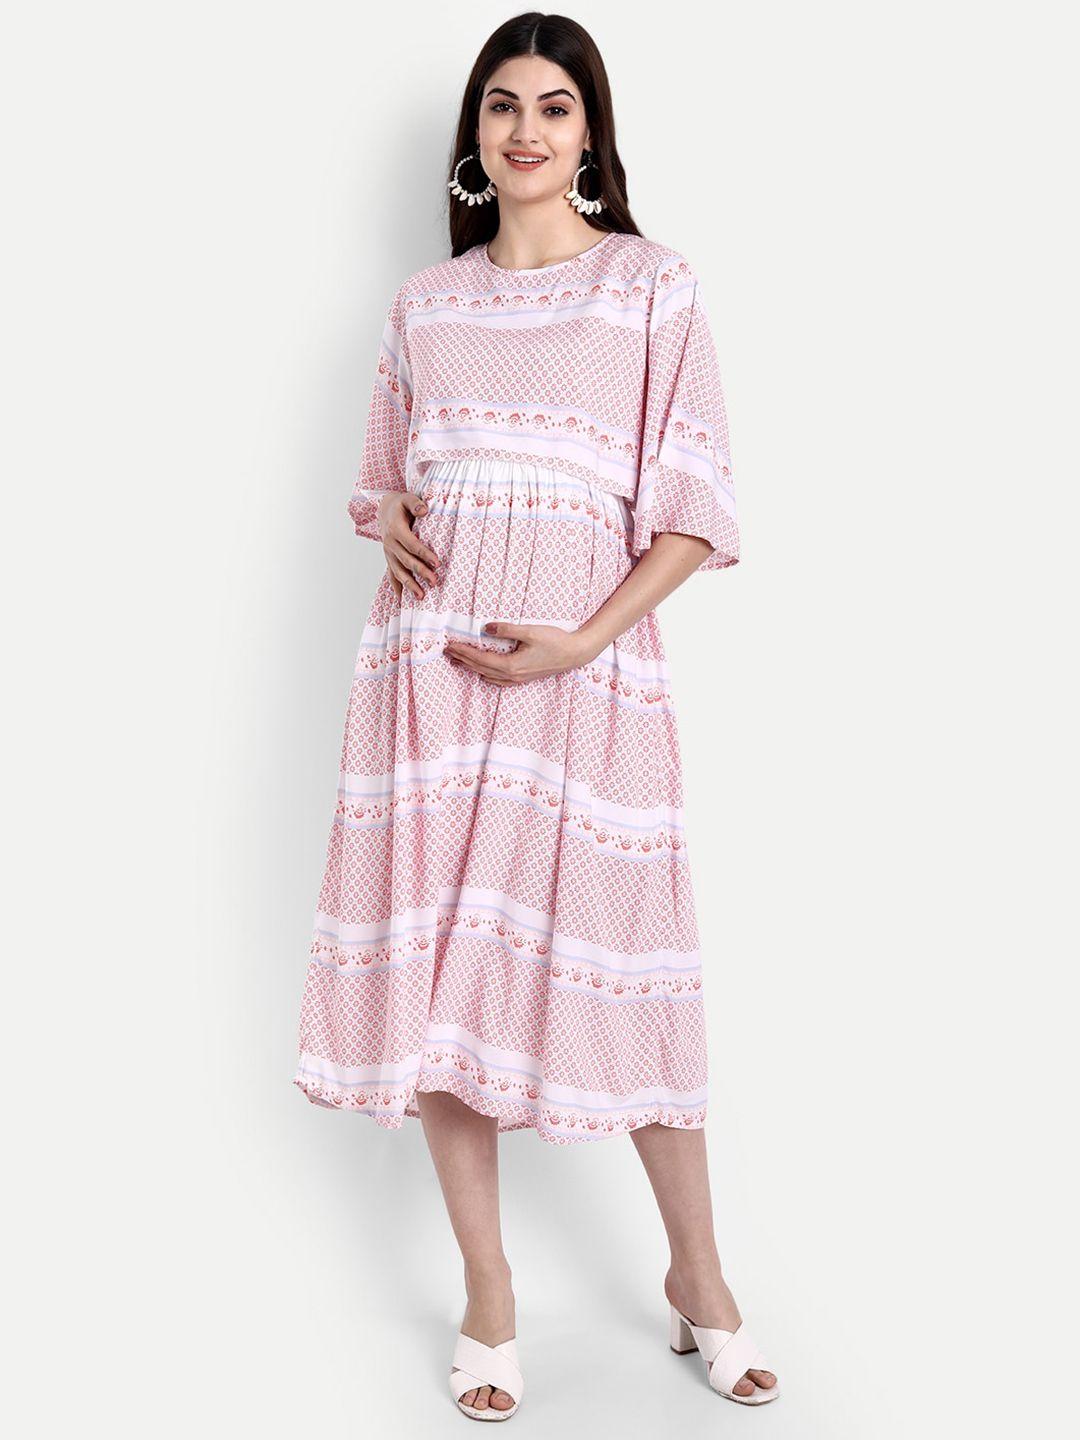 aaruvi ruchi verma pink ethnic motifs maternity midi dress